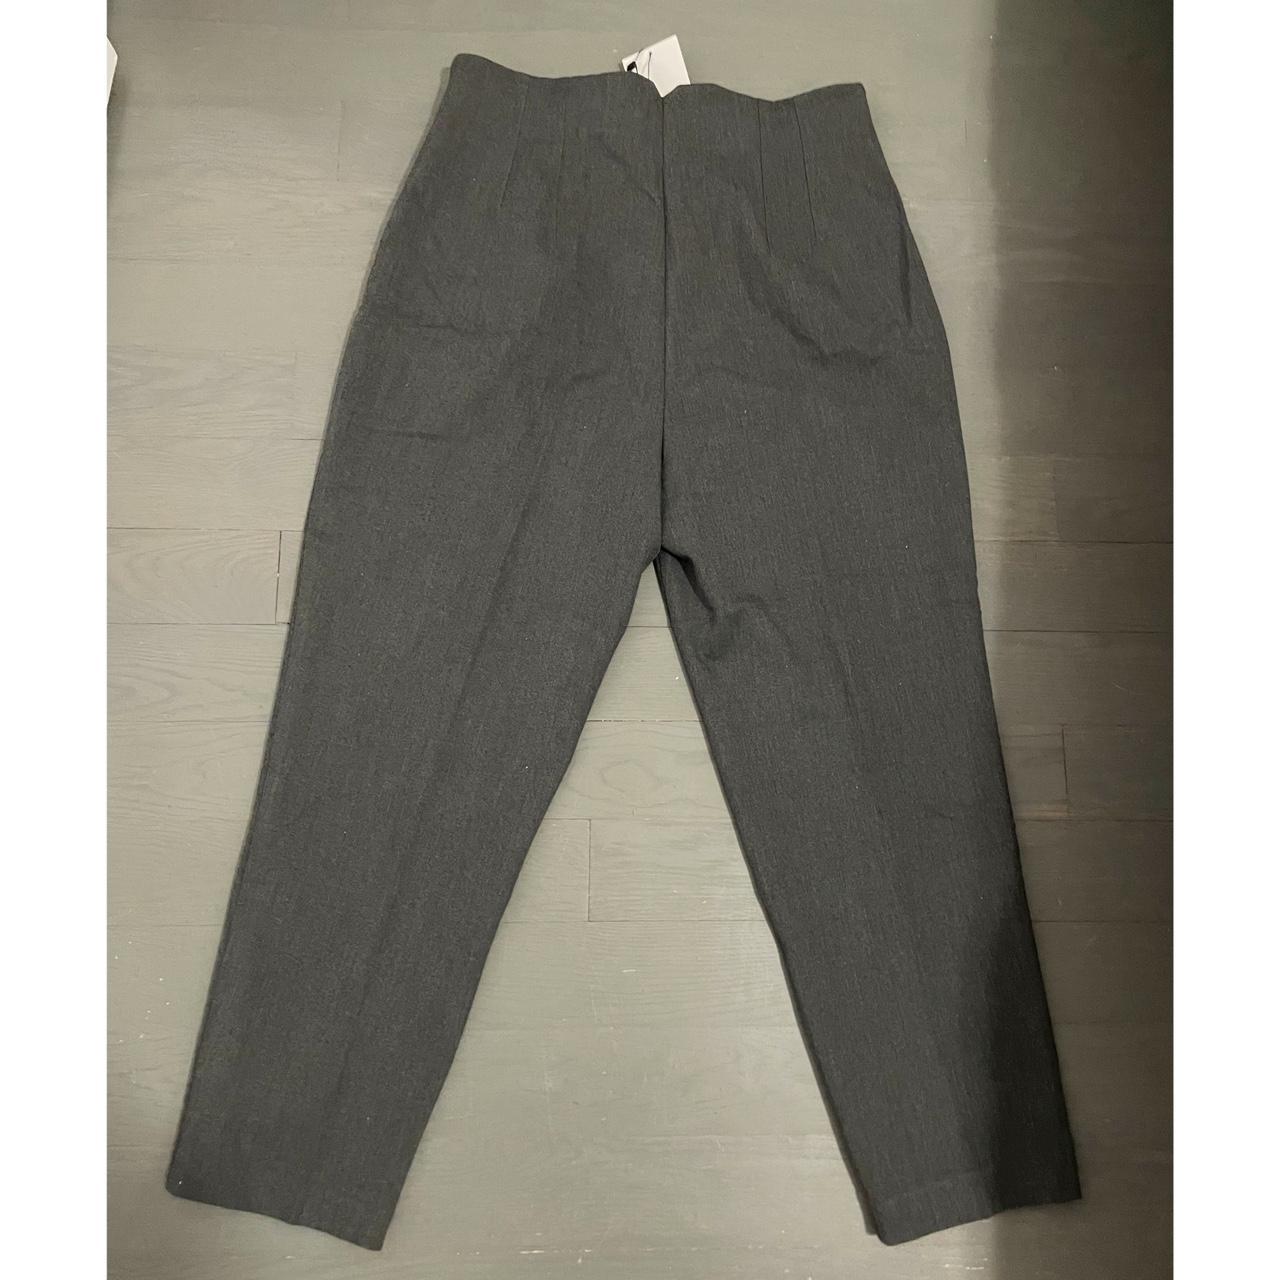 Zara Women's Grey Trousers (2)